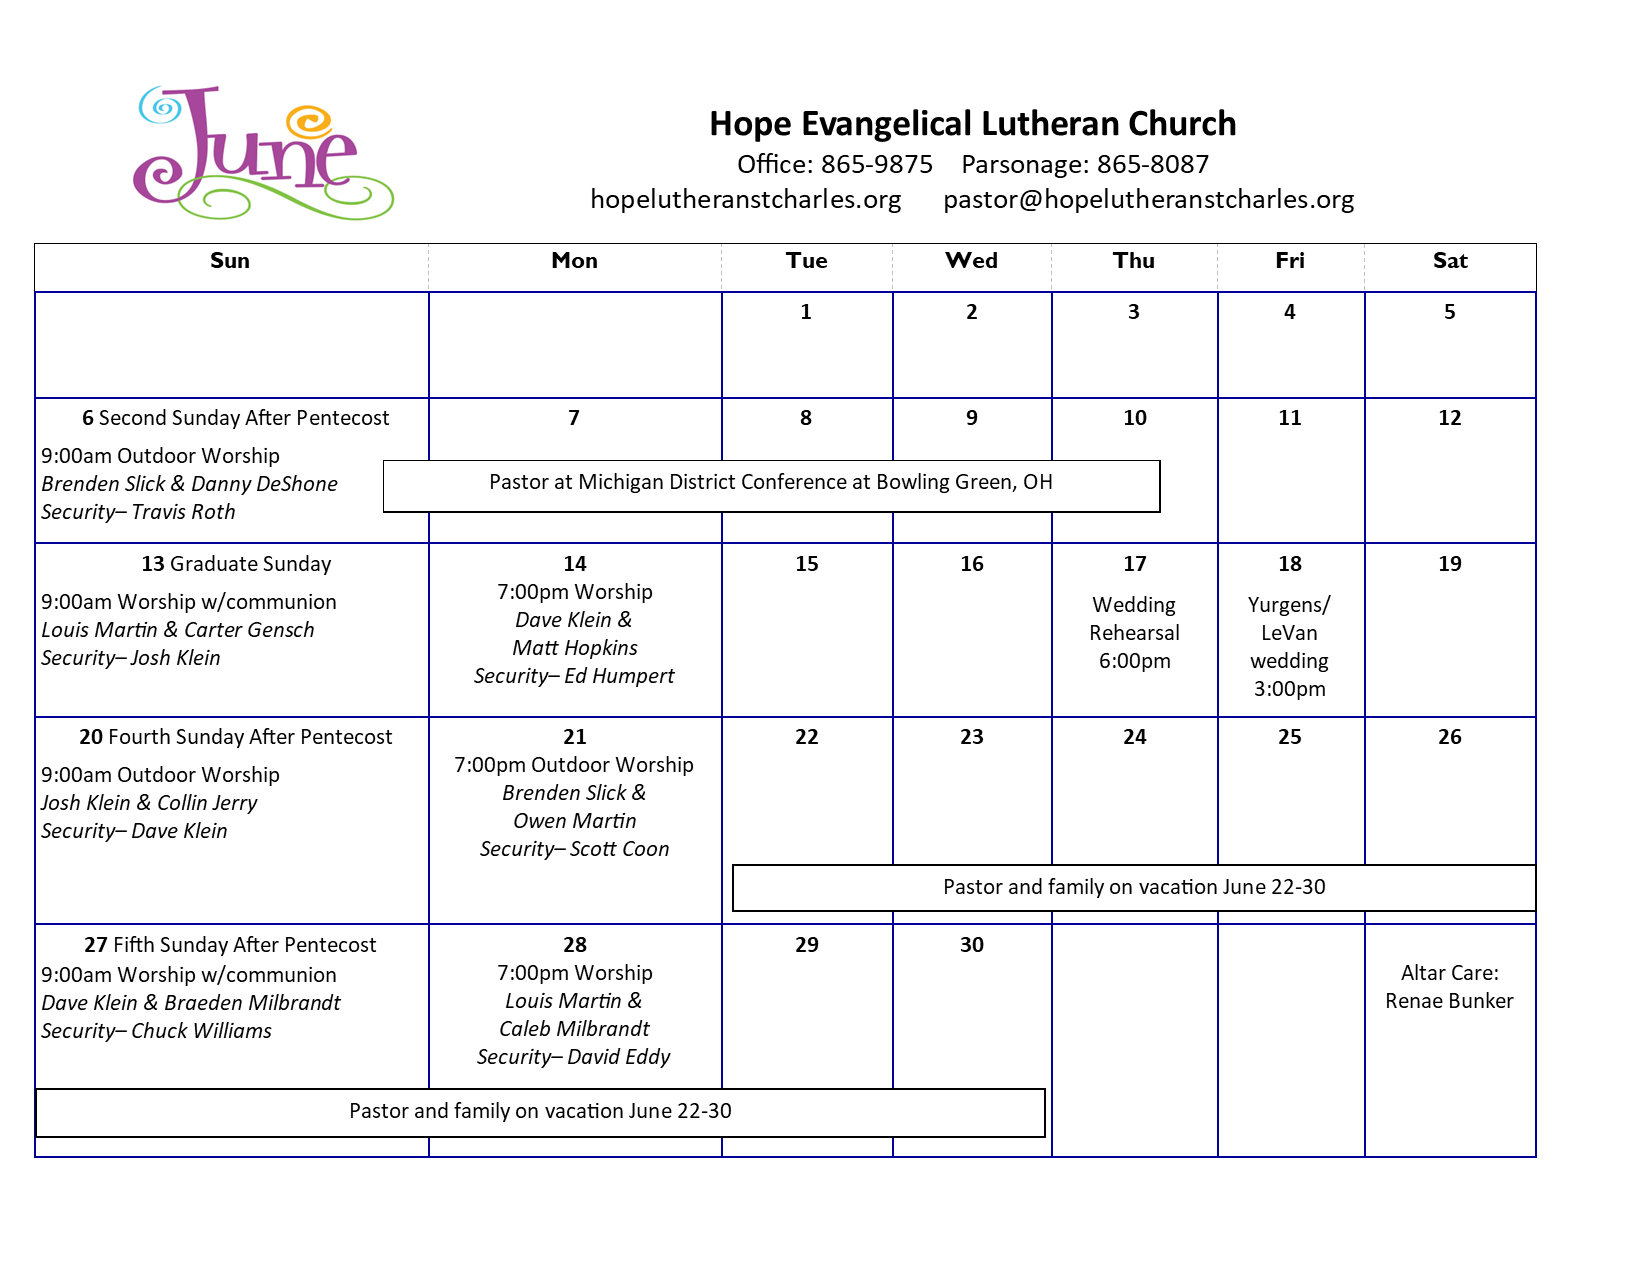 Monthly Calendar - Hope Evangelical Lutheran Church, St. Charles, MI